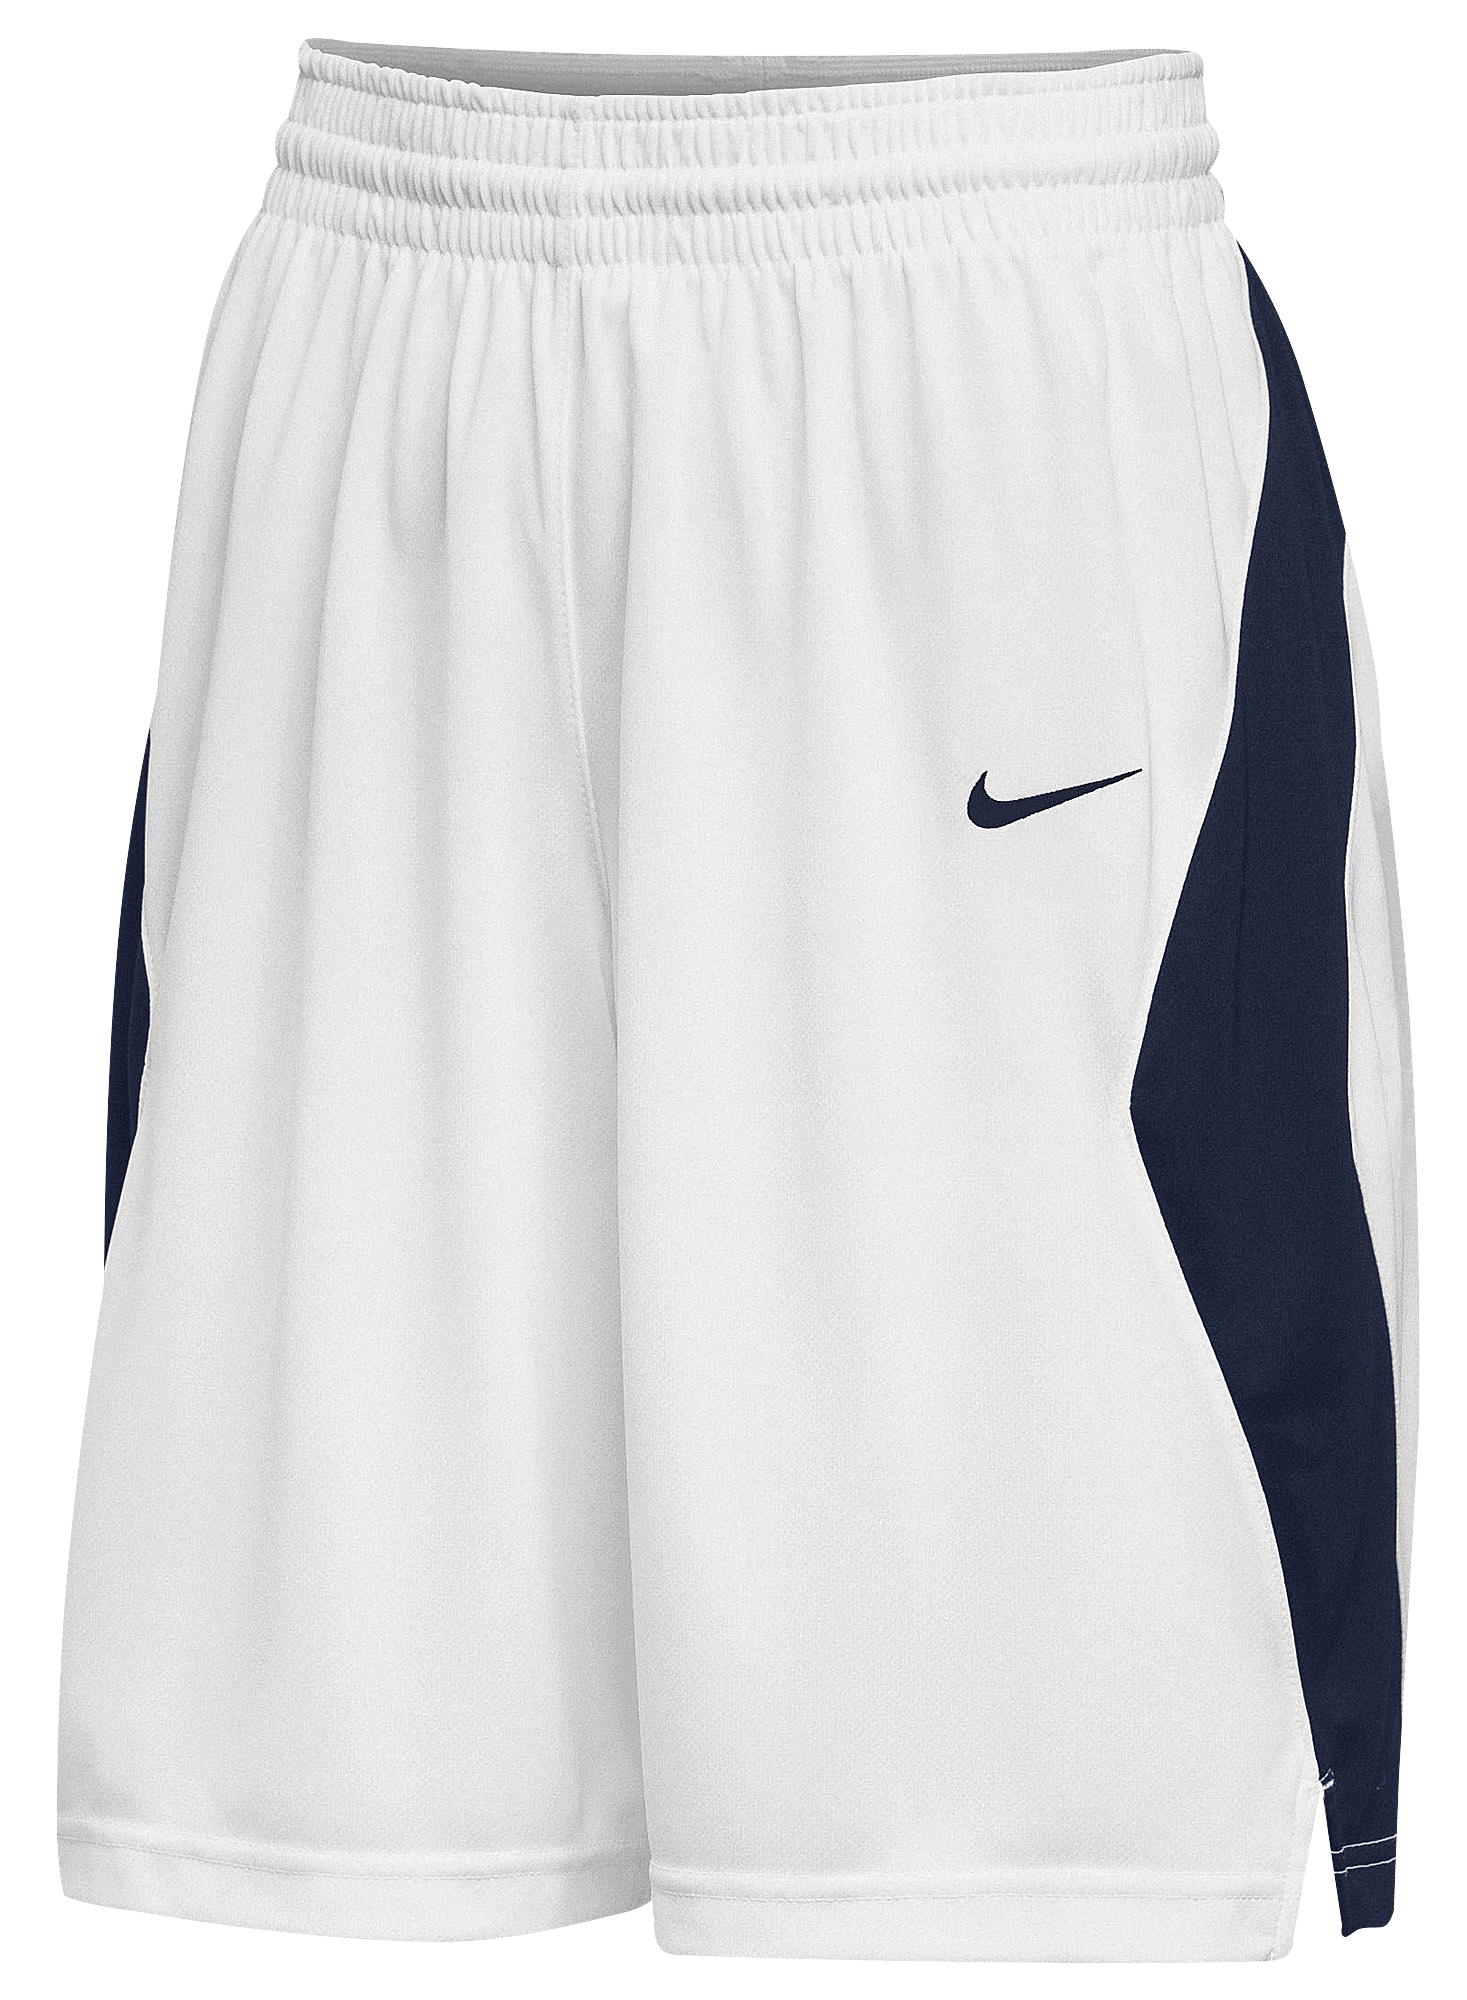 eastbay basketball shorts